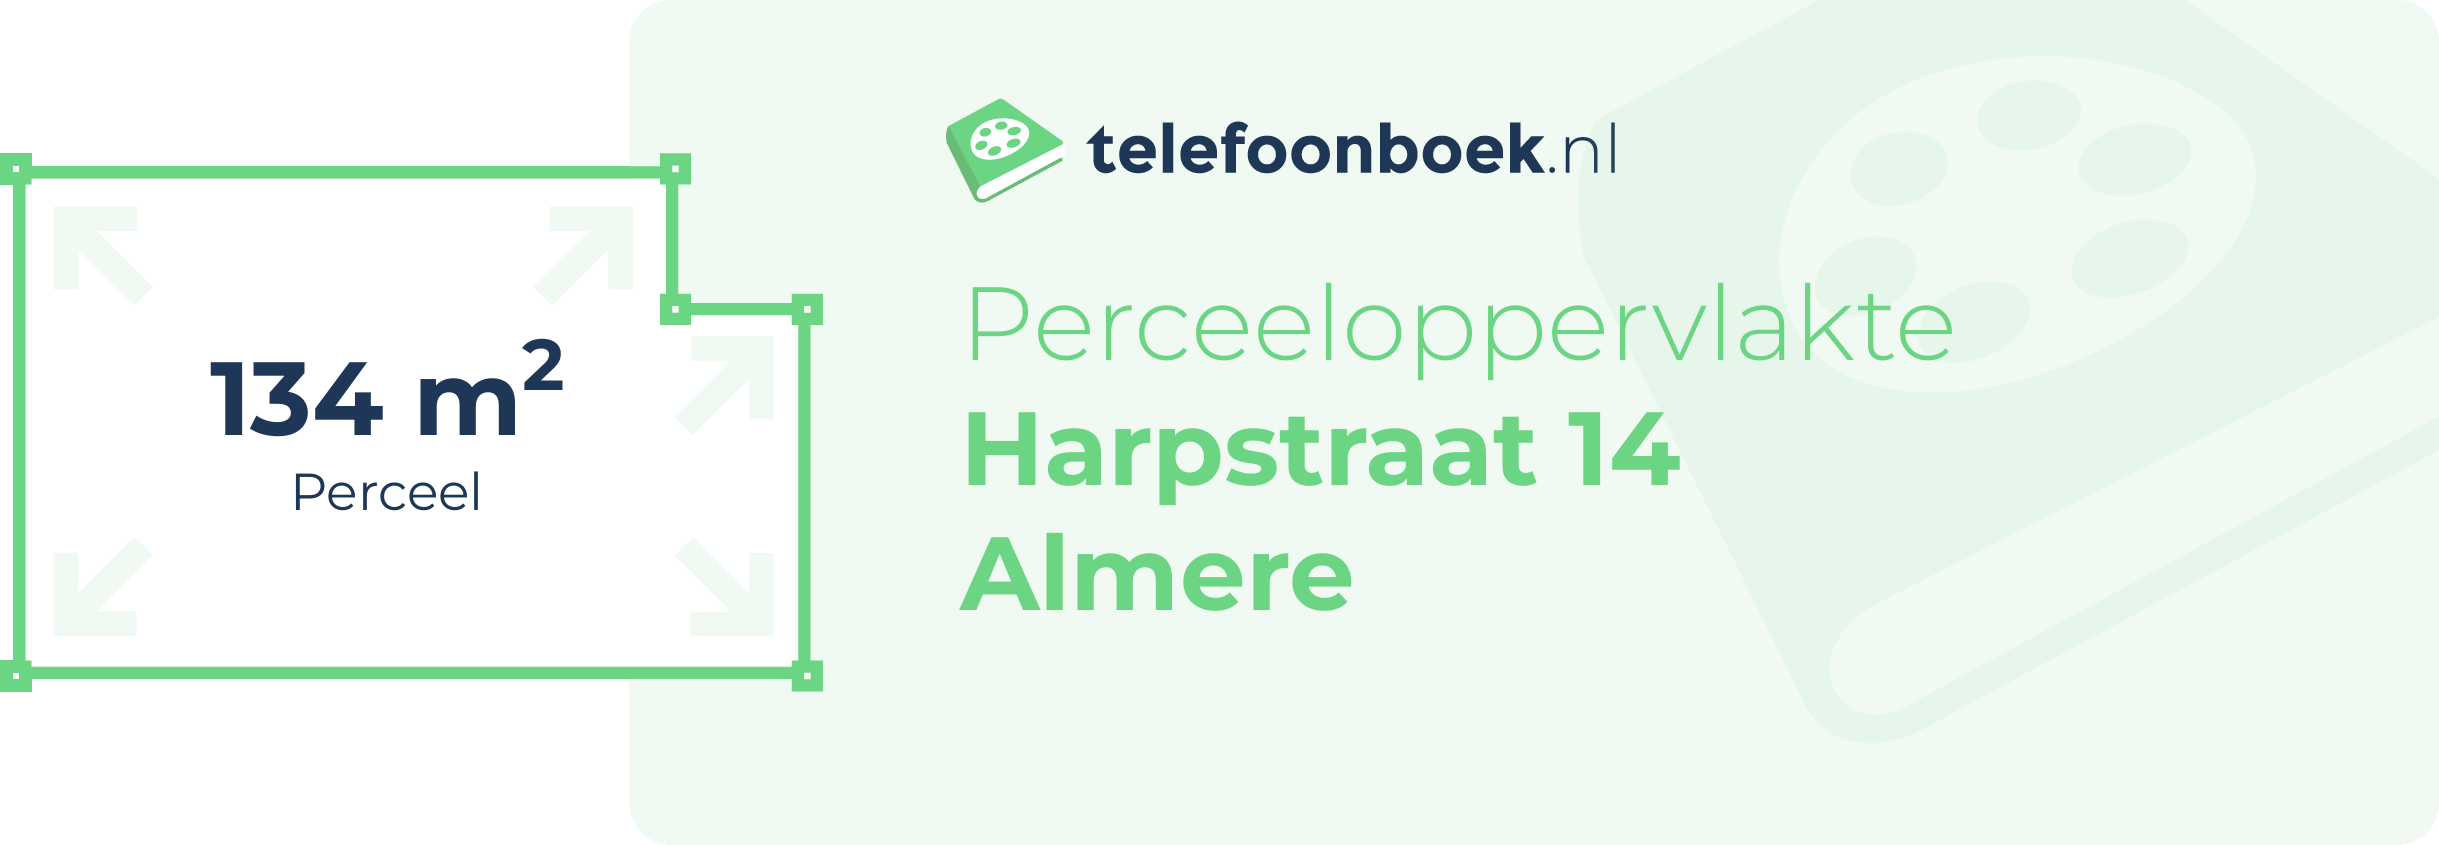 Perceeloppervlakte Harpstraat 14 Almere